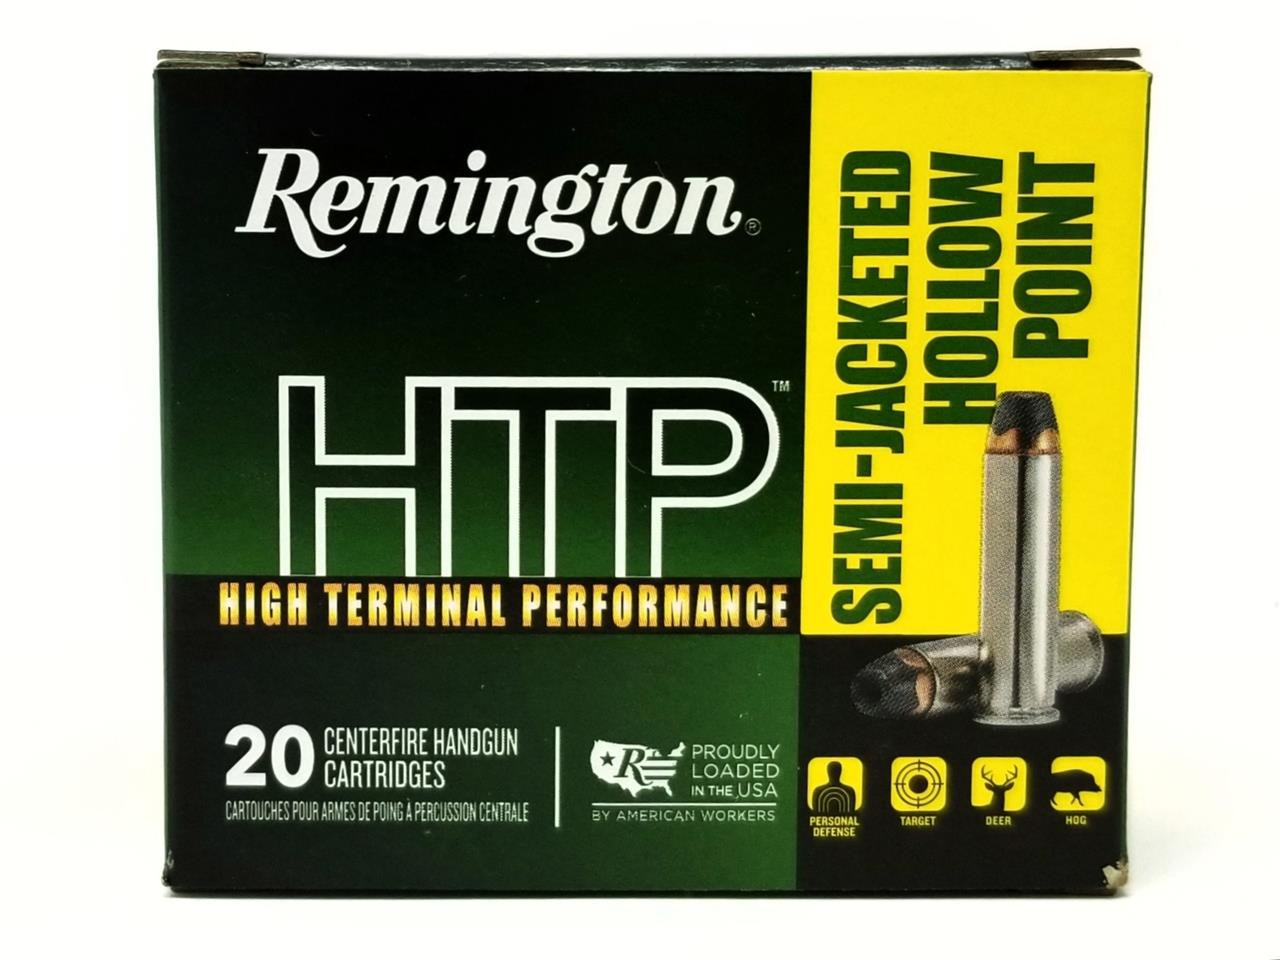 Remington HTP High Terminal Performance 38 Special